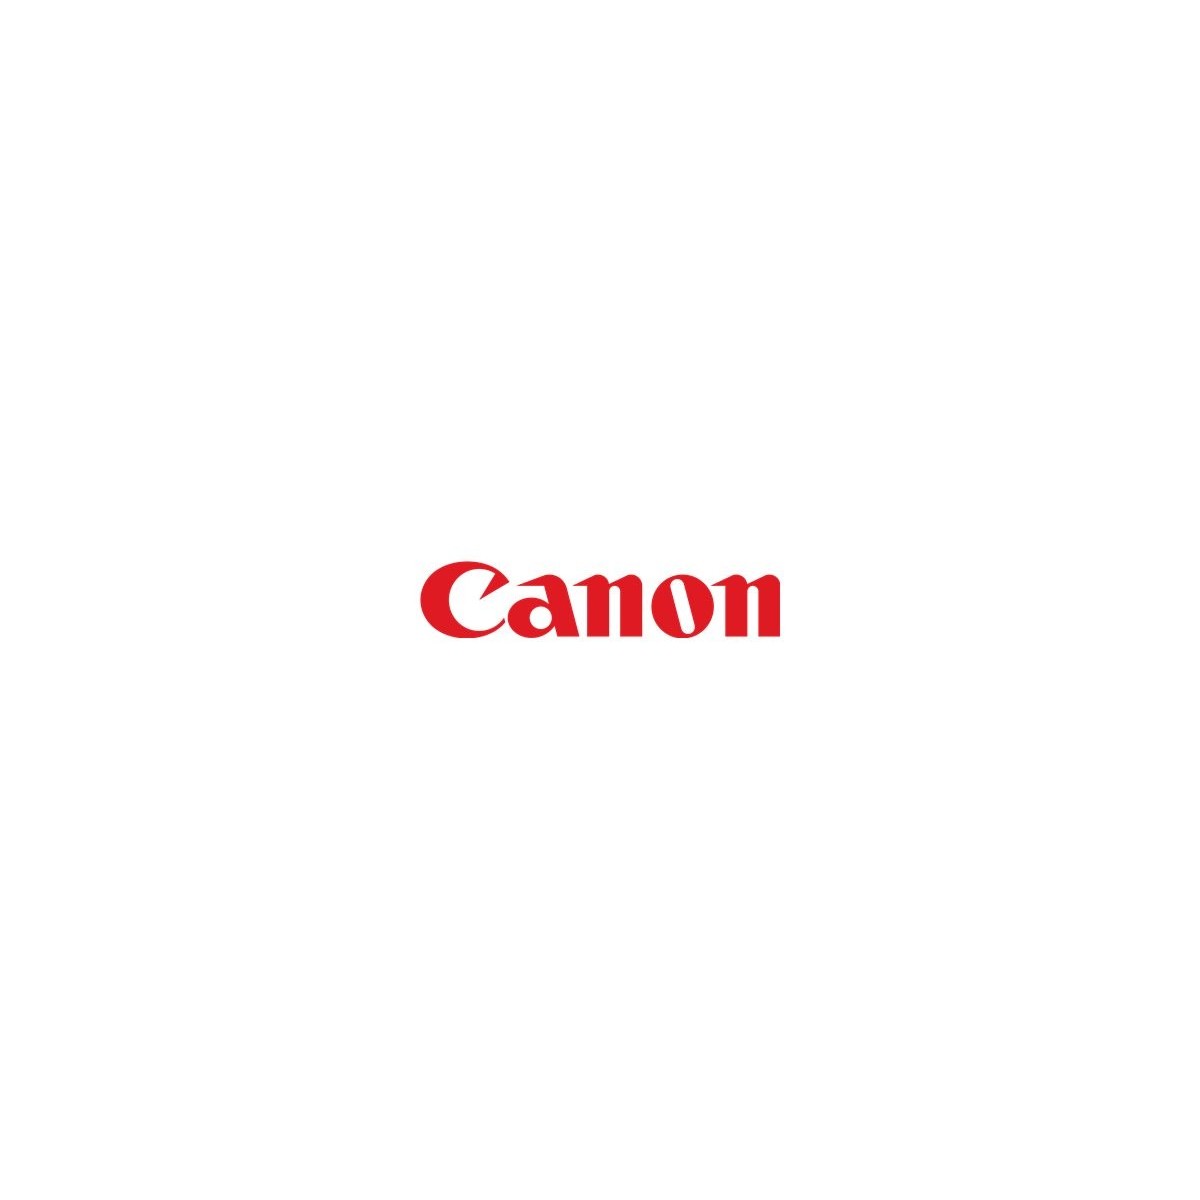 Canon QM4-3670 - Unwinder - Black - White - 1 pc(s)